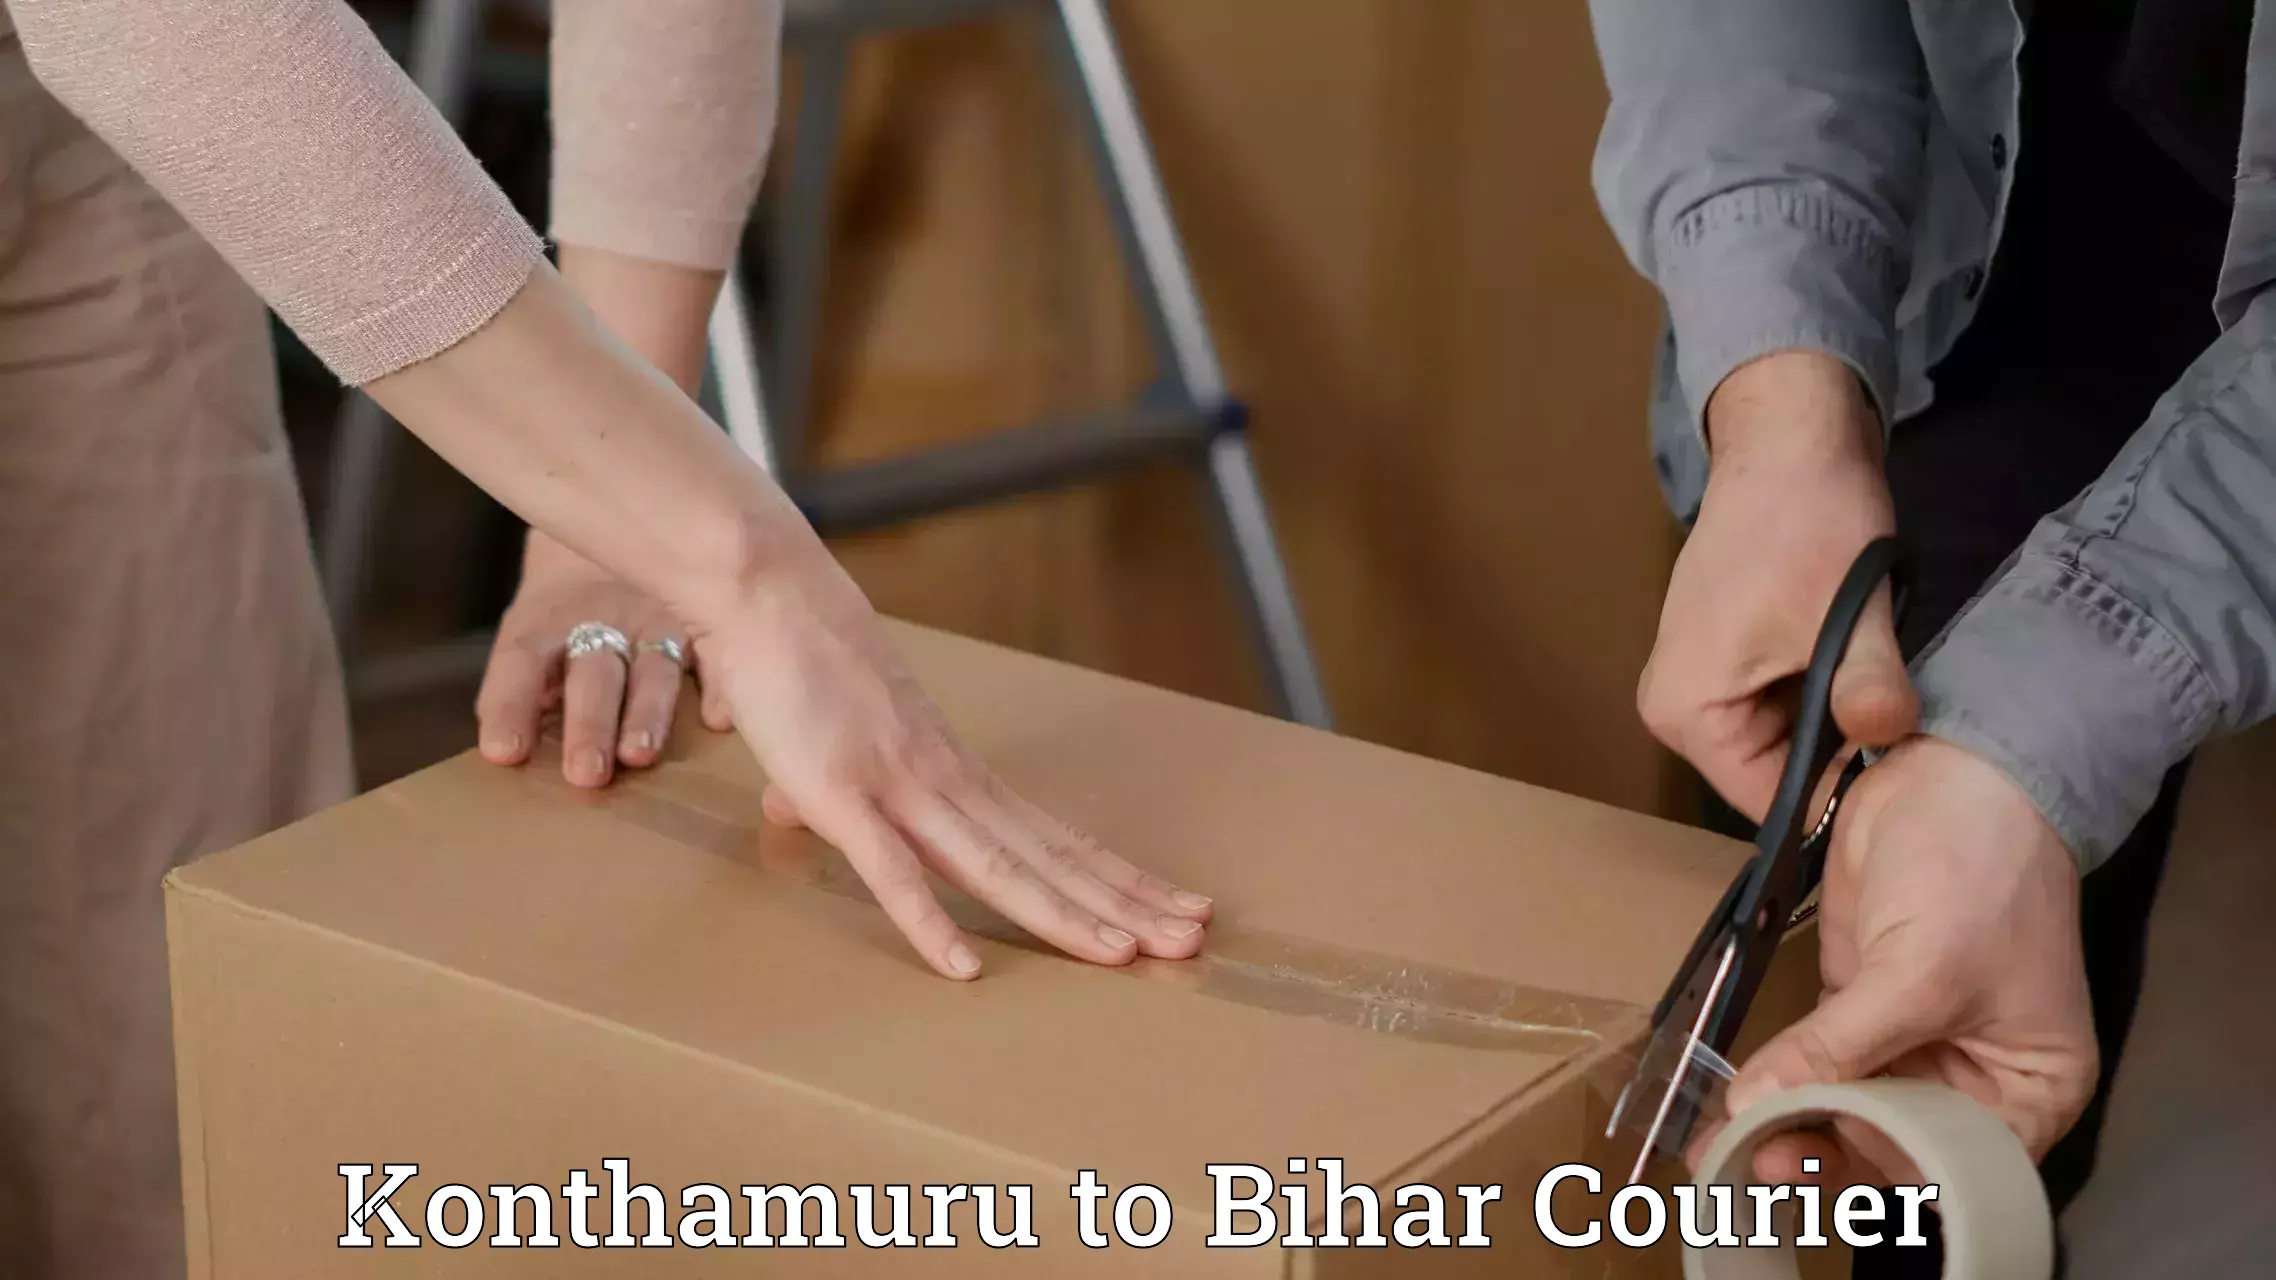 Courier service efficiency Konthamuru to Bettiah